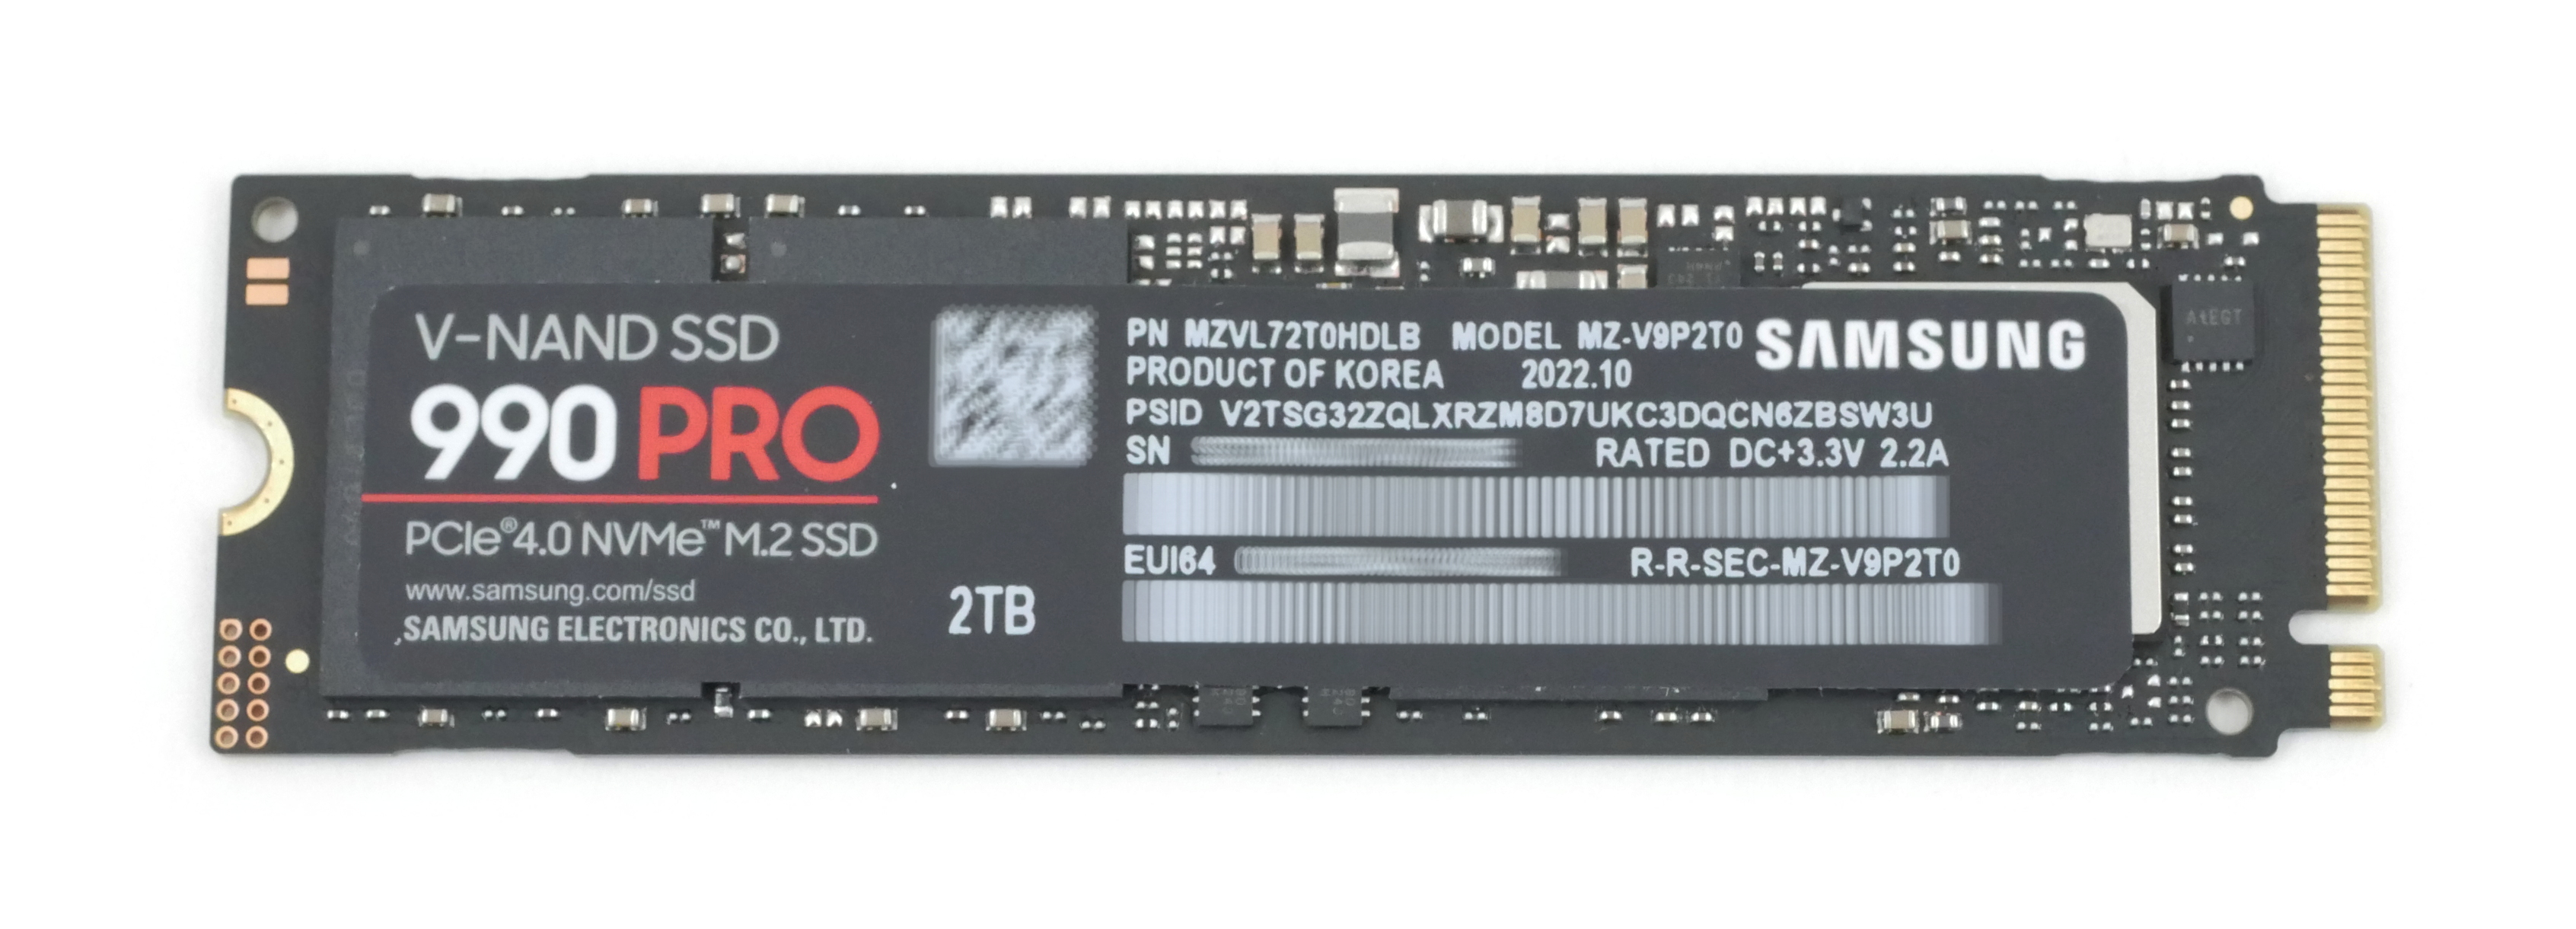 Samsung 990 Pro 2TB MZ-V9P2T0B V-NAND SSD M.2 2280 PCIe 4.0 x4 NVMe MZVL72T0HDLB - Click Image to Close